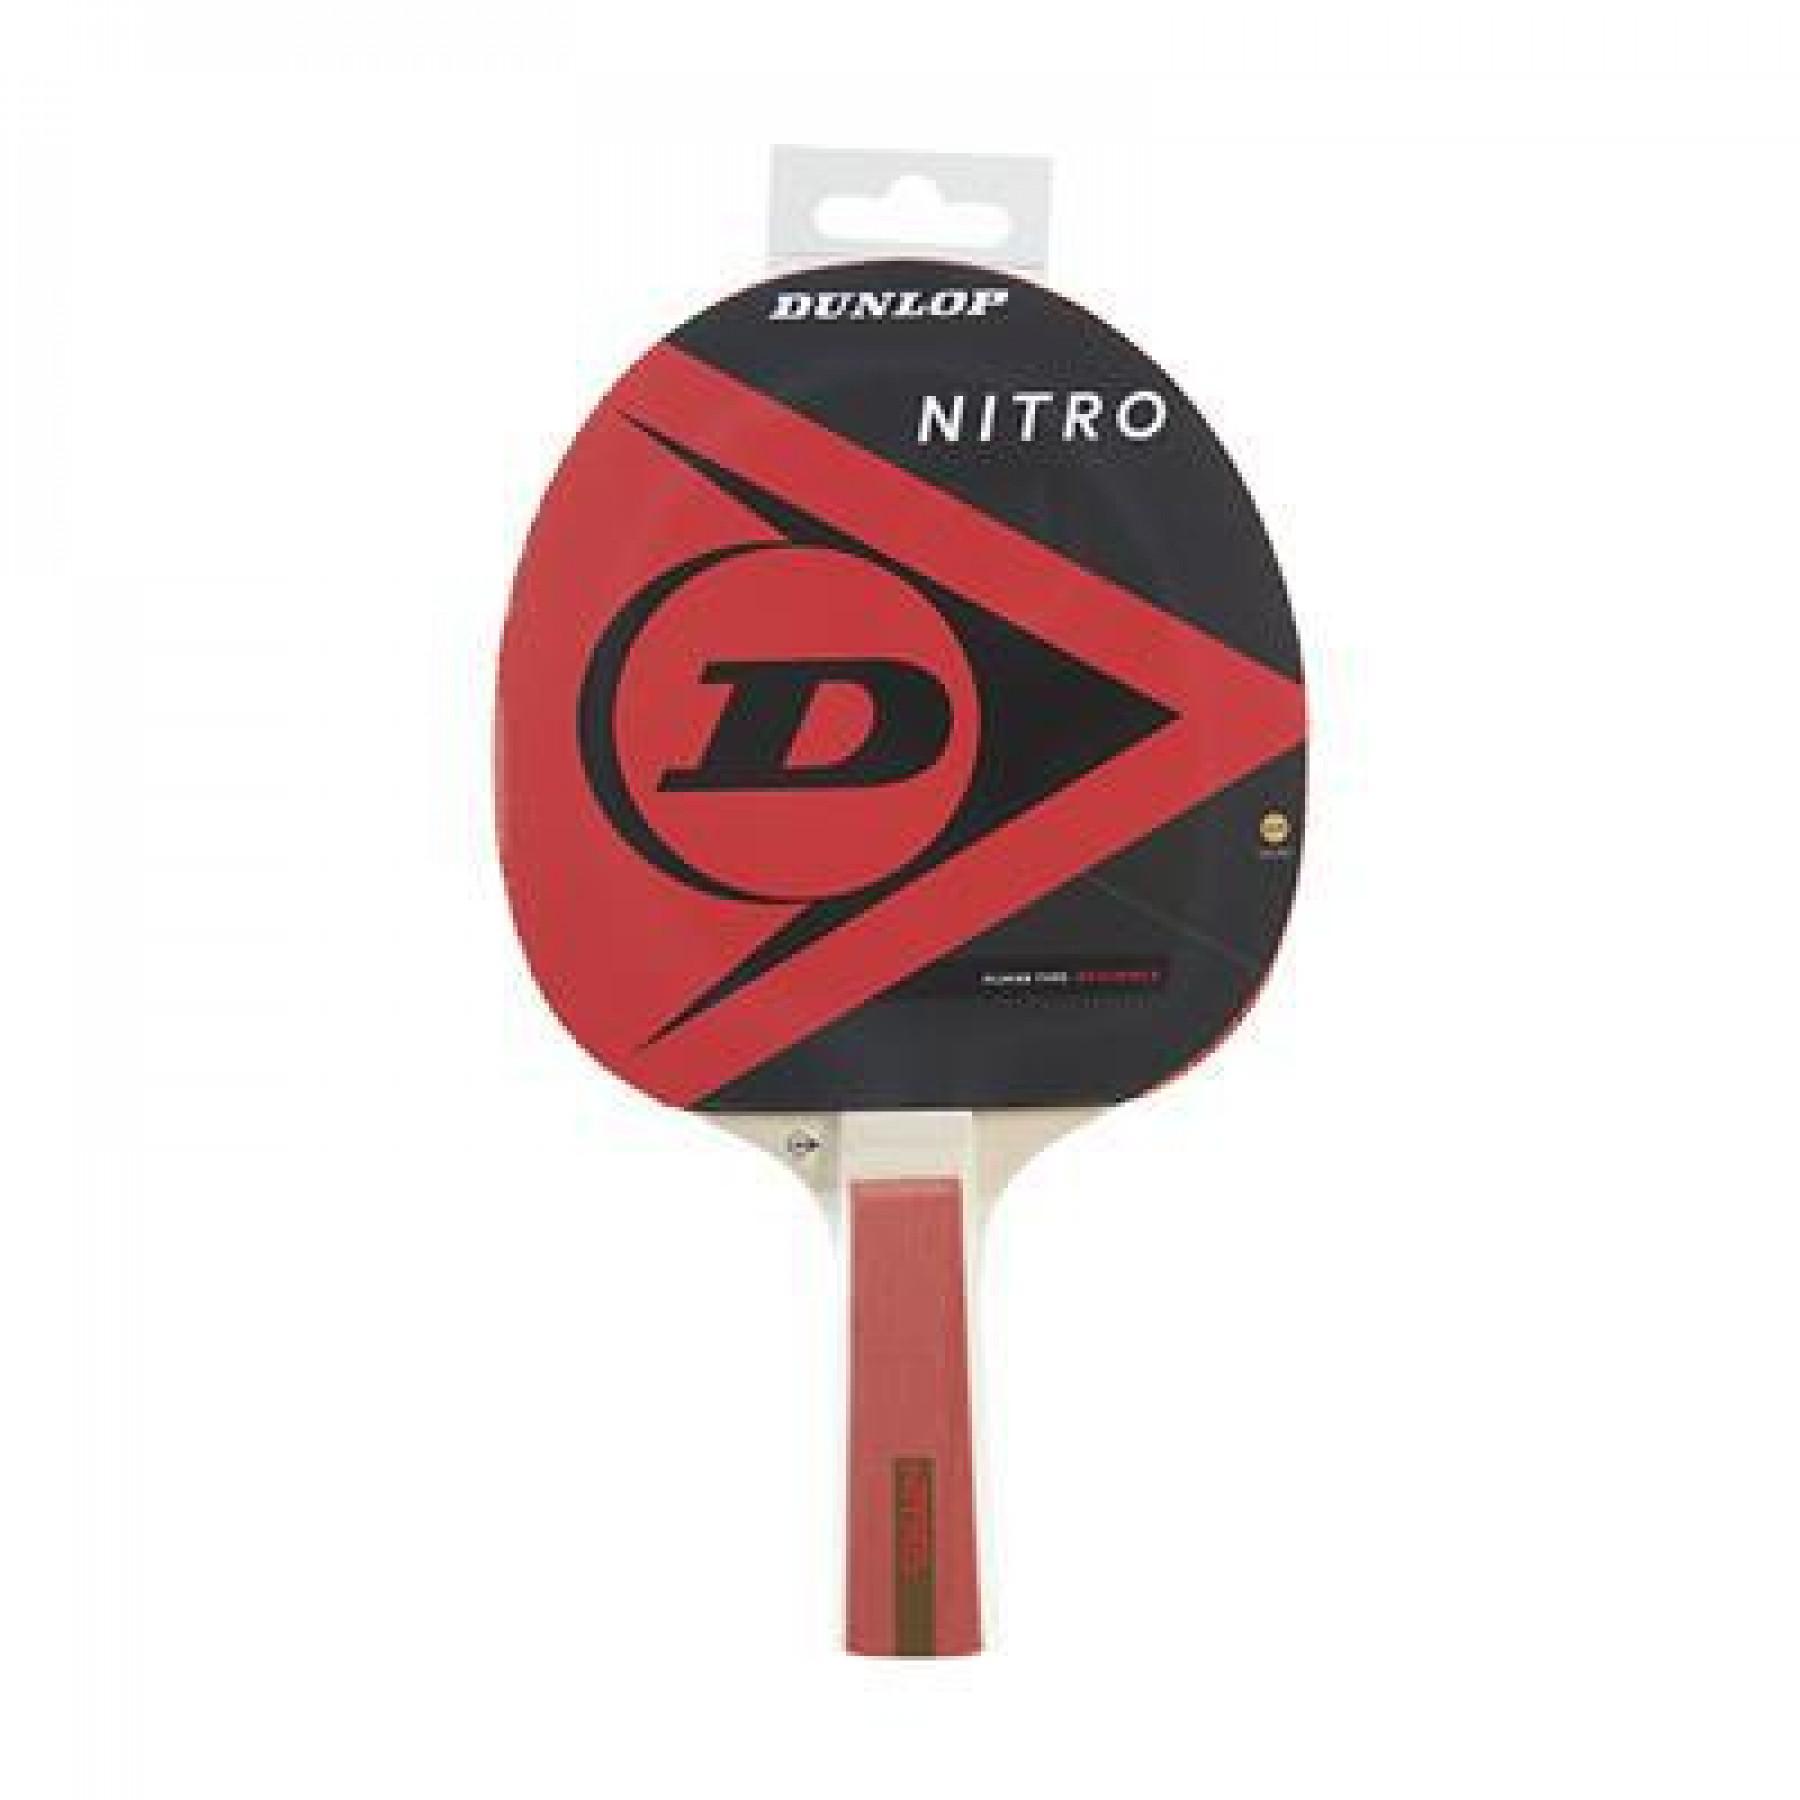 Raqueta Dunlop nitro